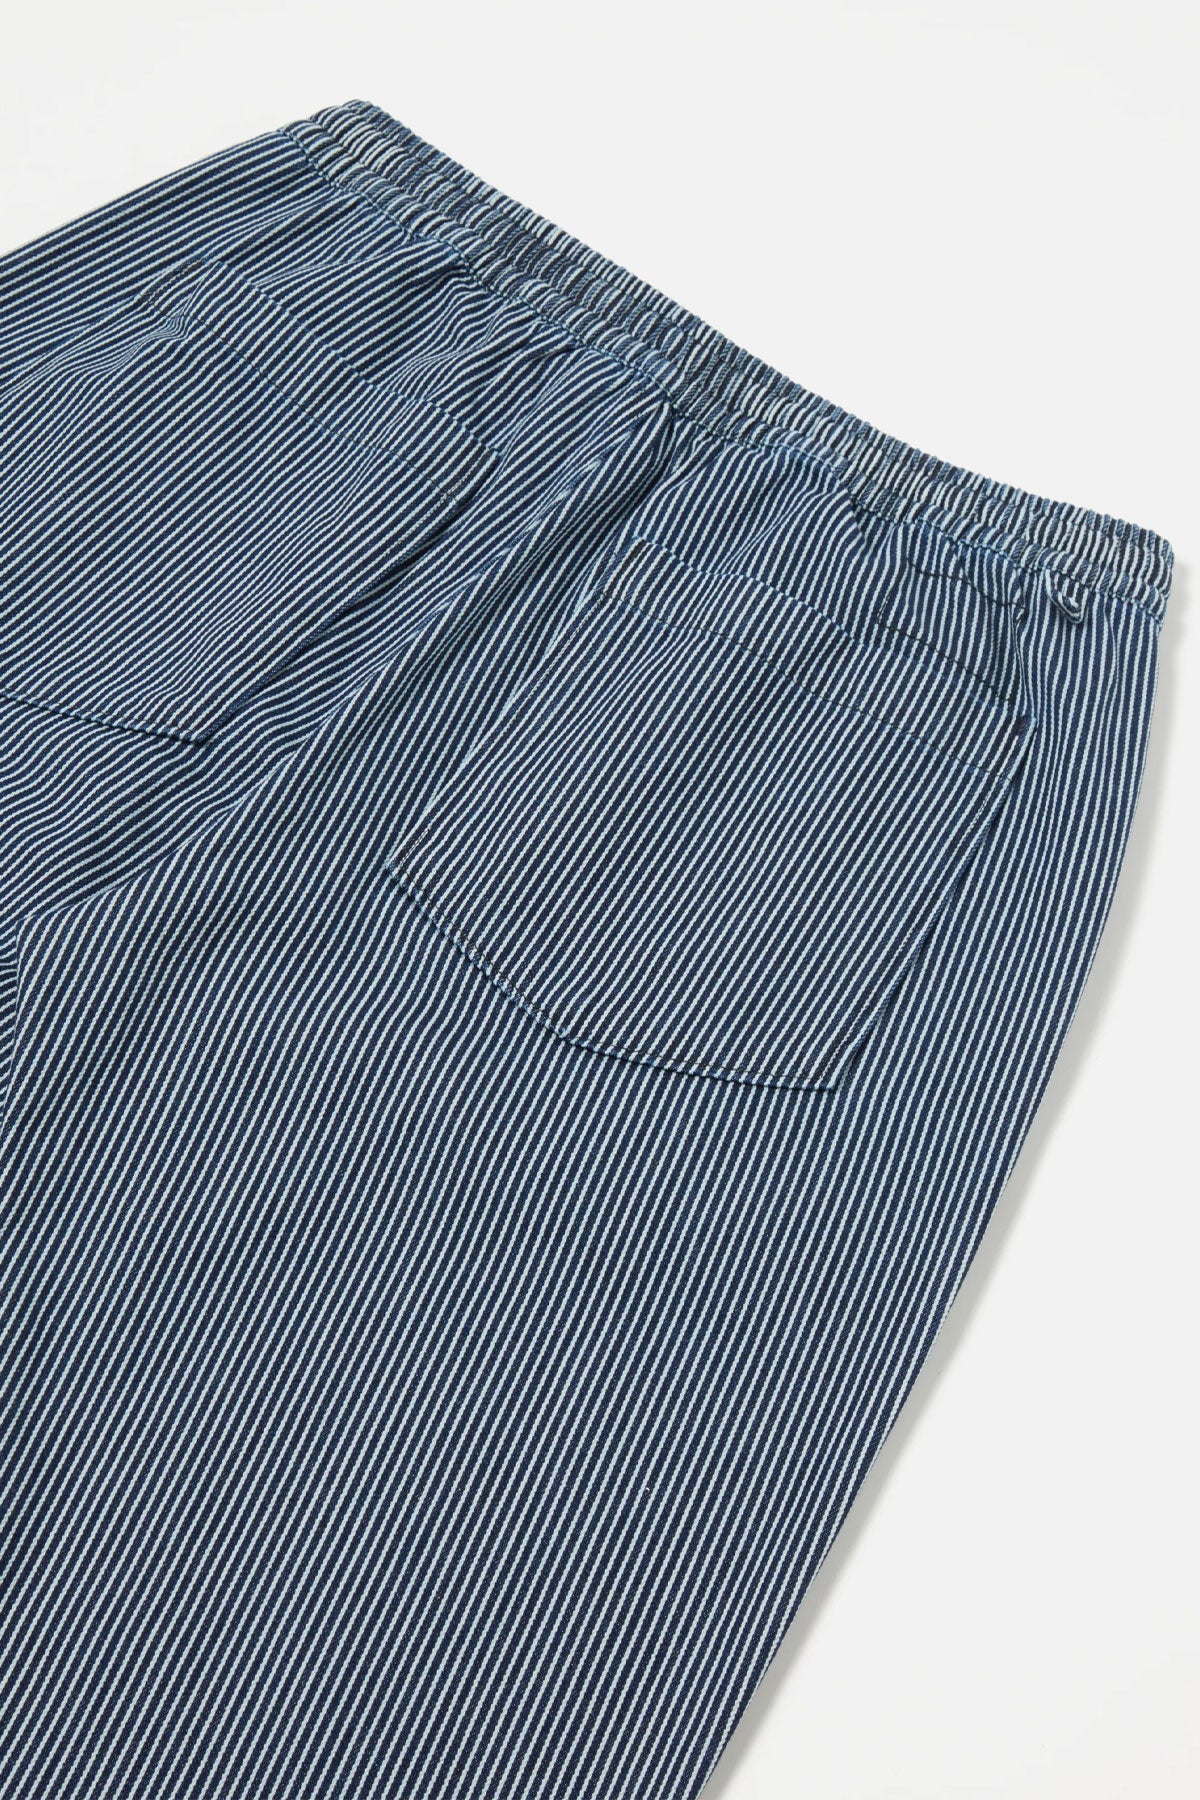 Universal Works - Hi Water Trouser In Indigo Hickory Stripe Denim